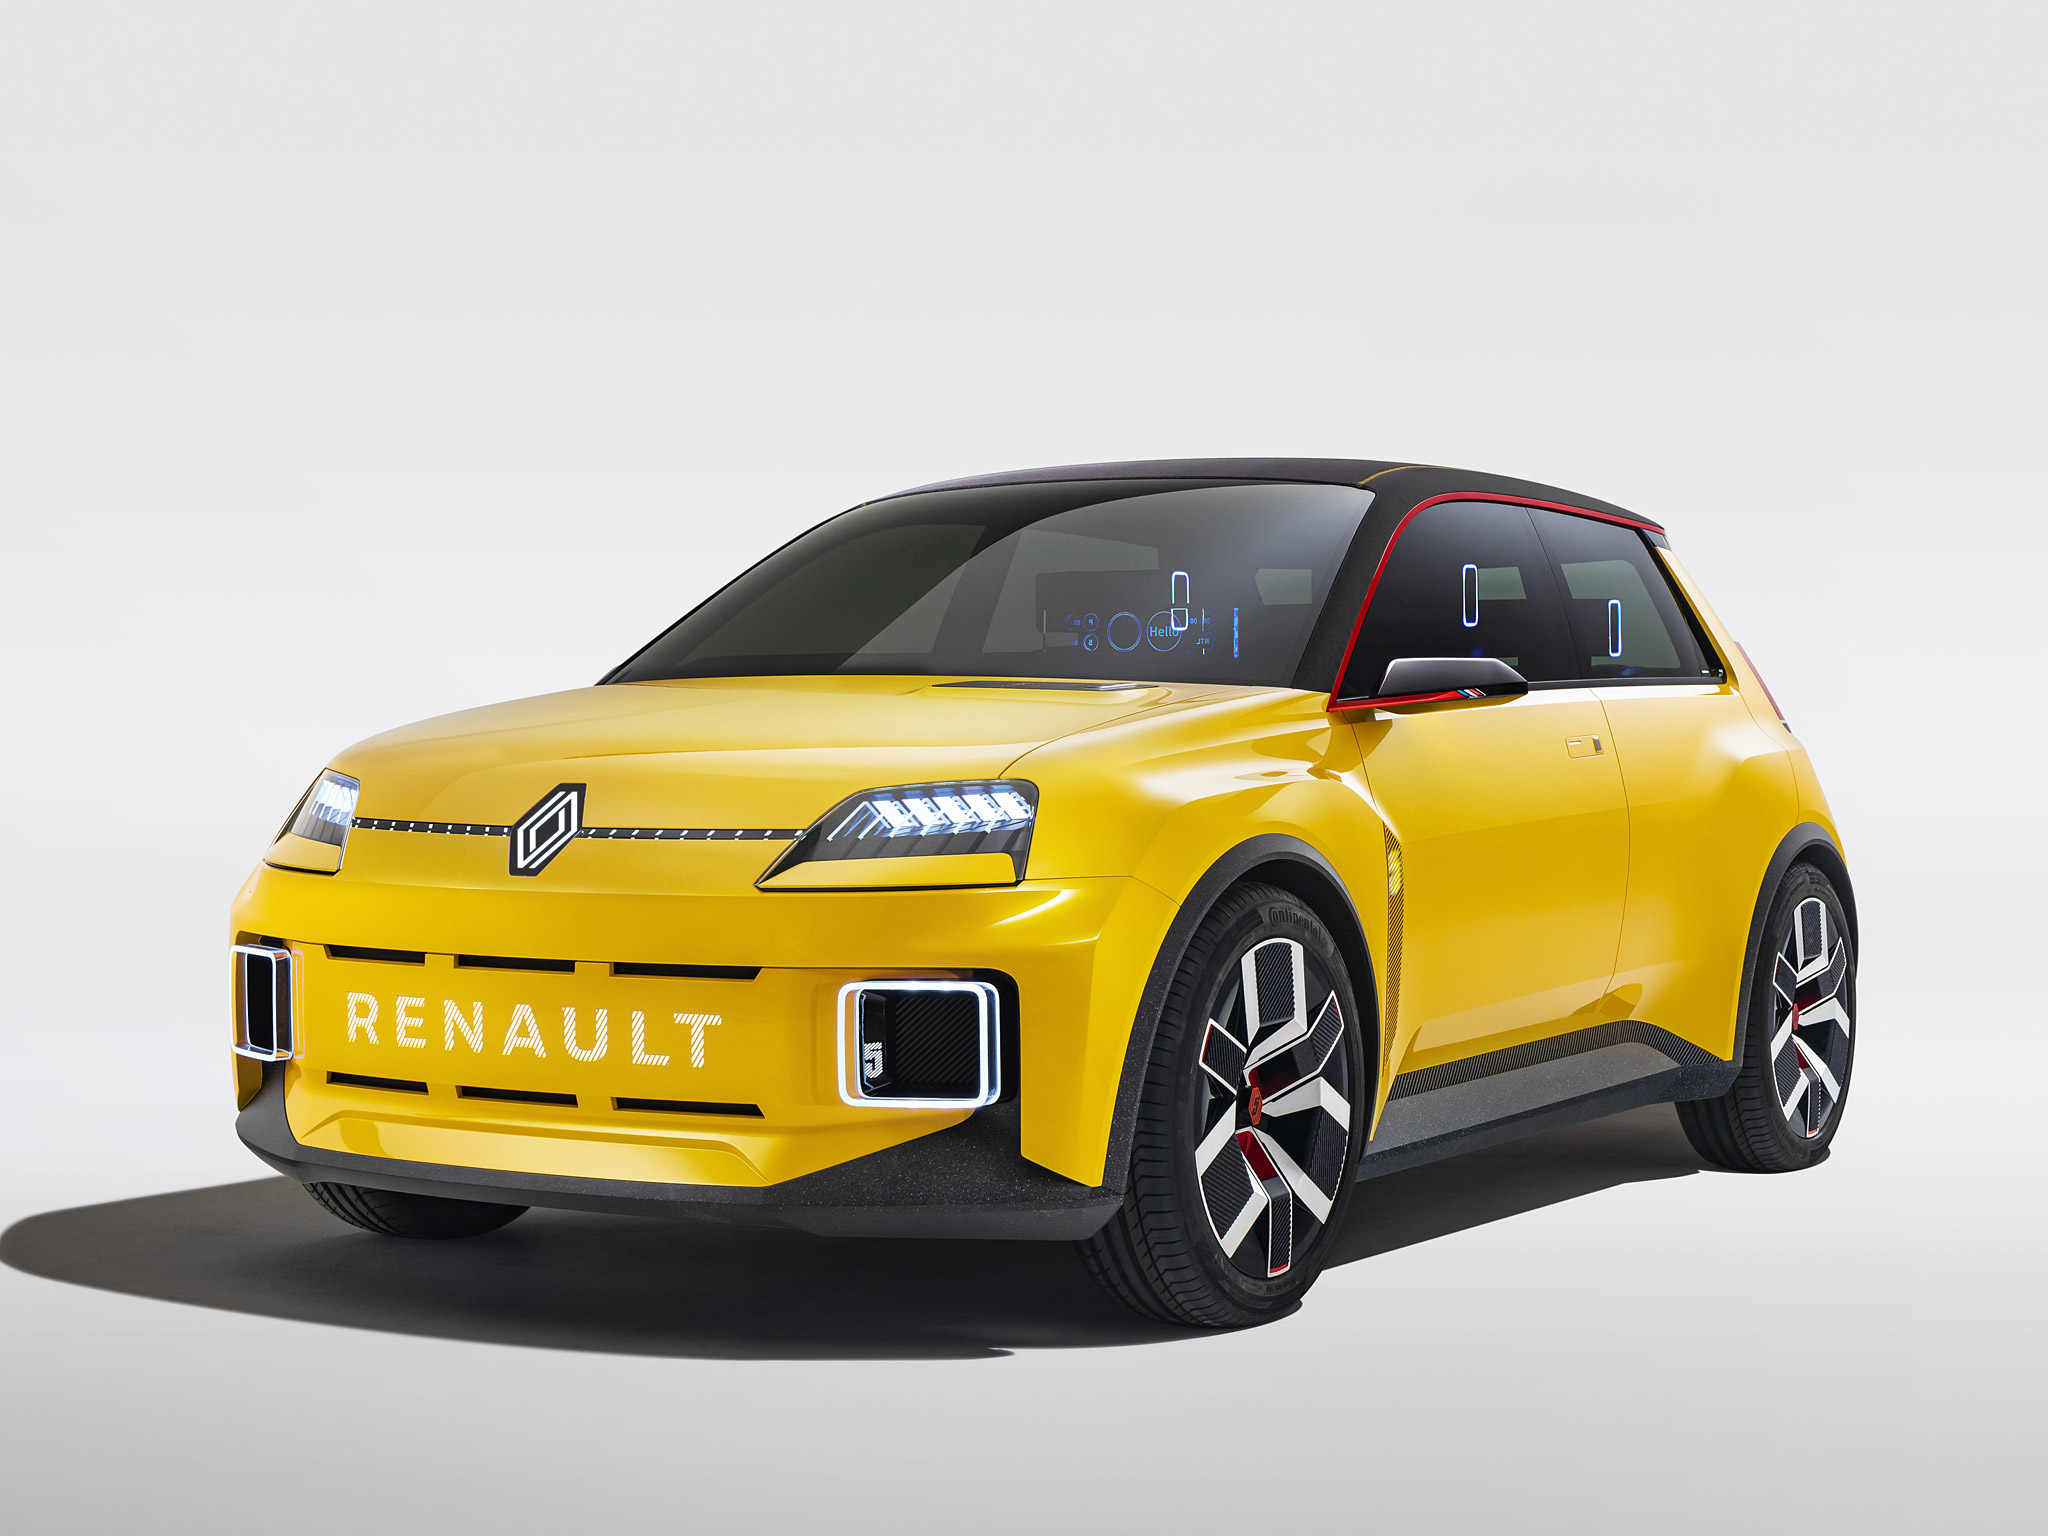  2021 Renault 5 Concept Wallpaper.